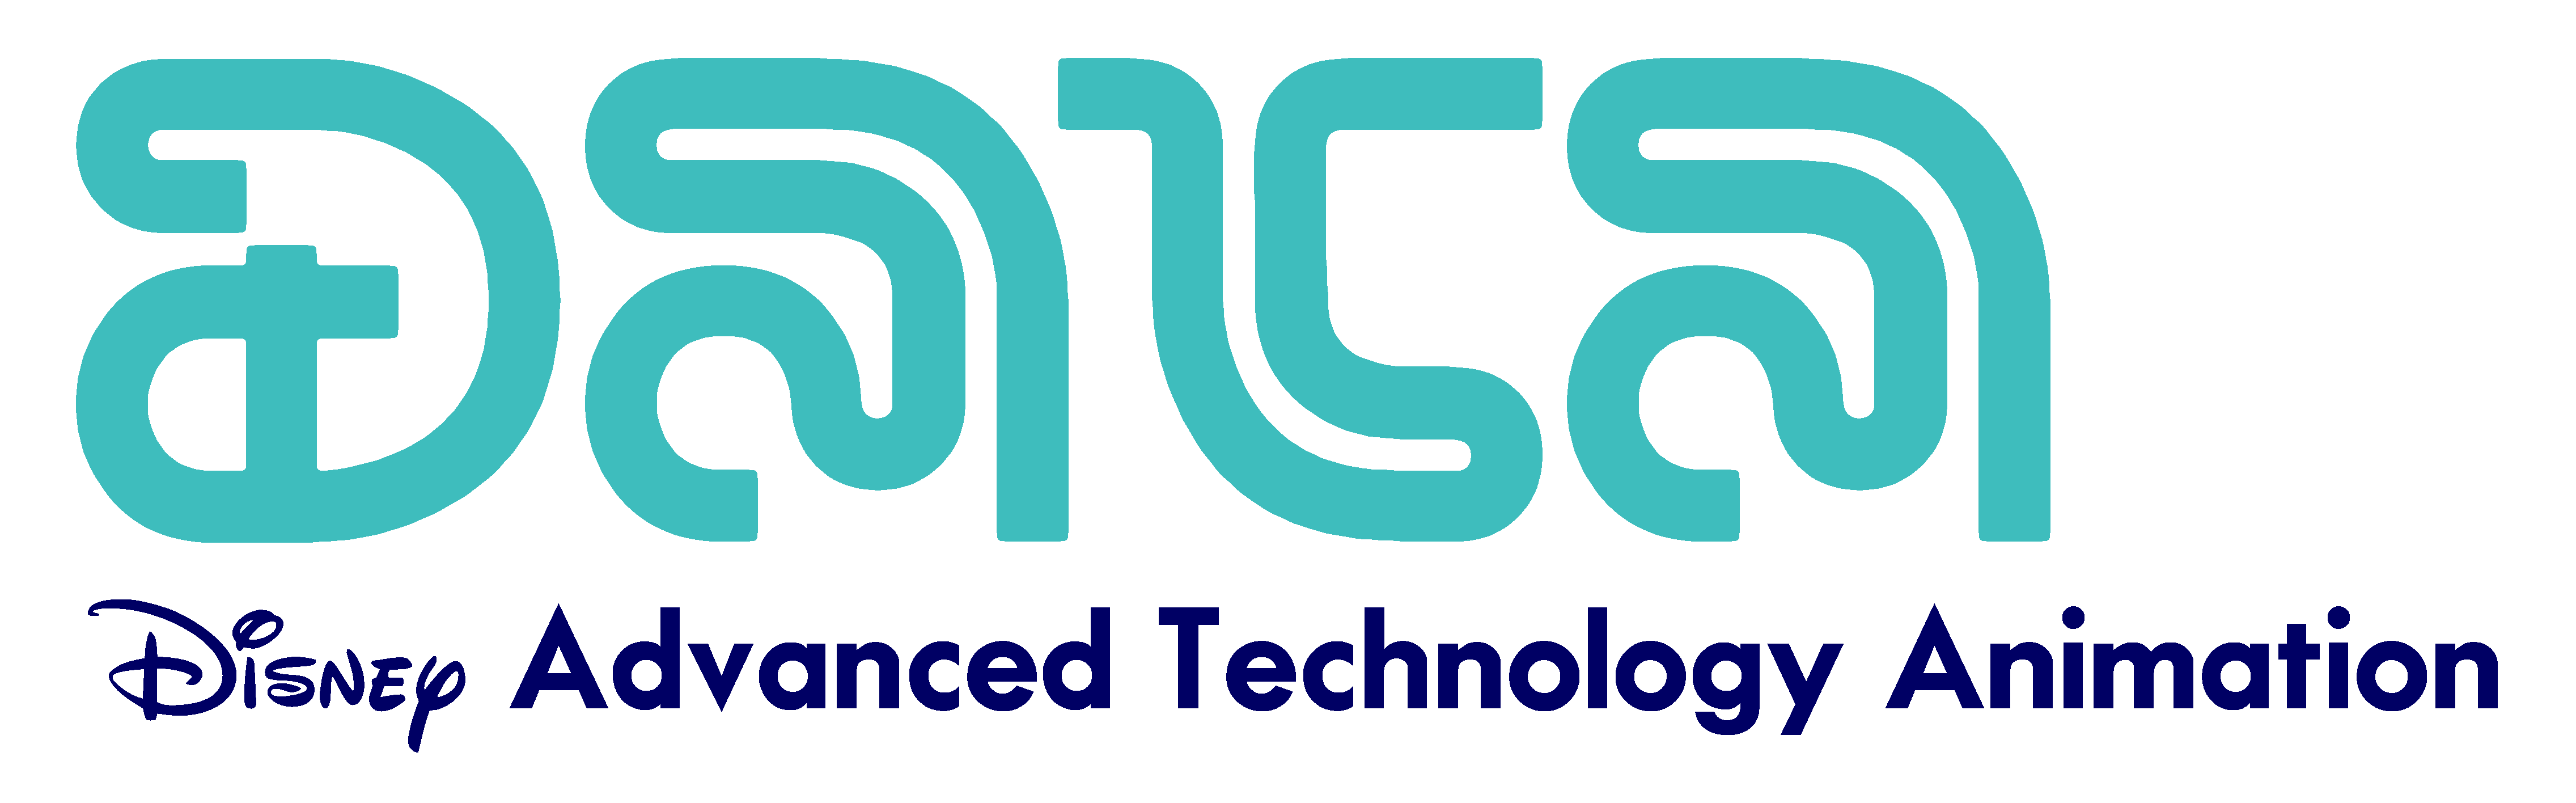 disney-advanced-technology-animation-logo-png.769783